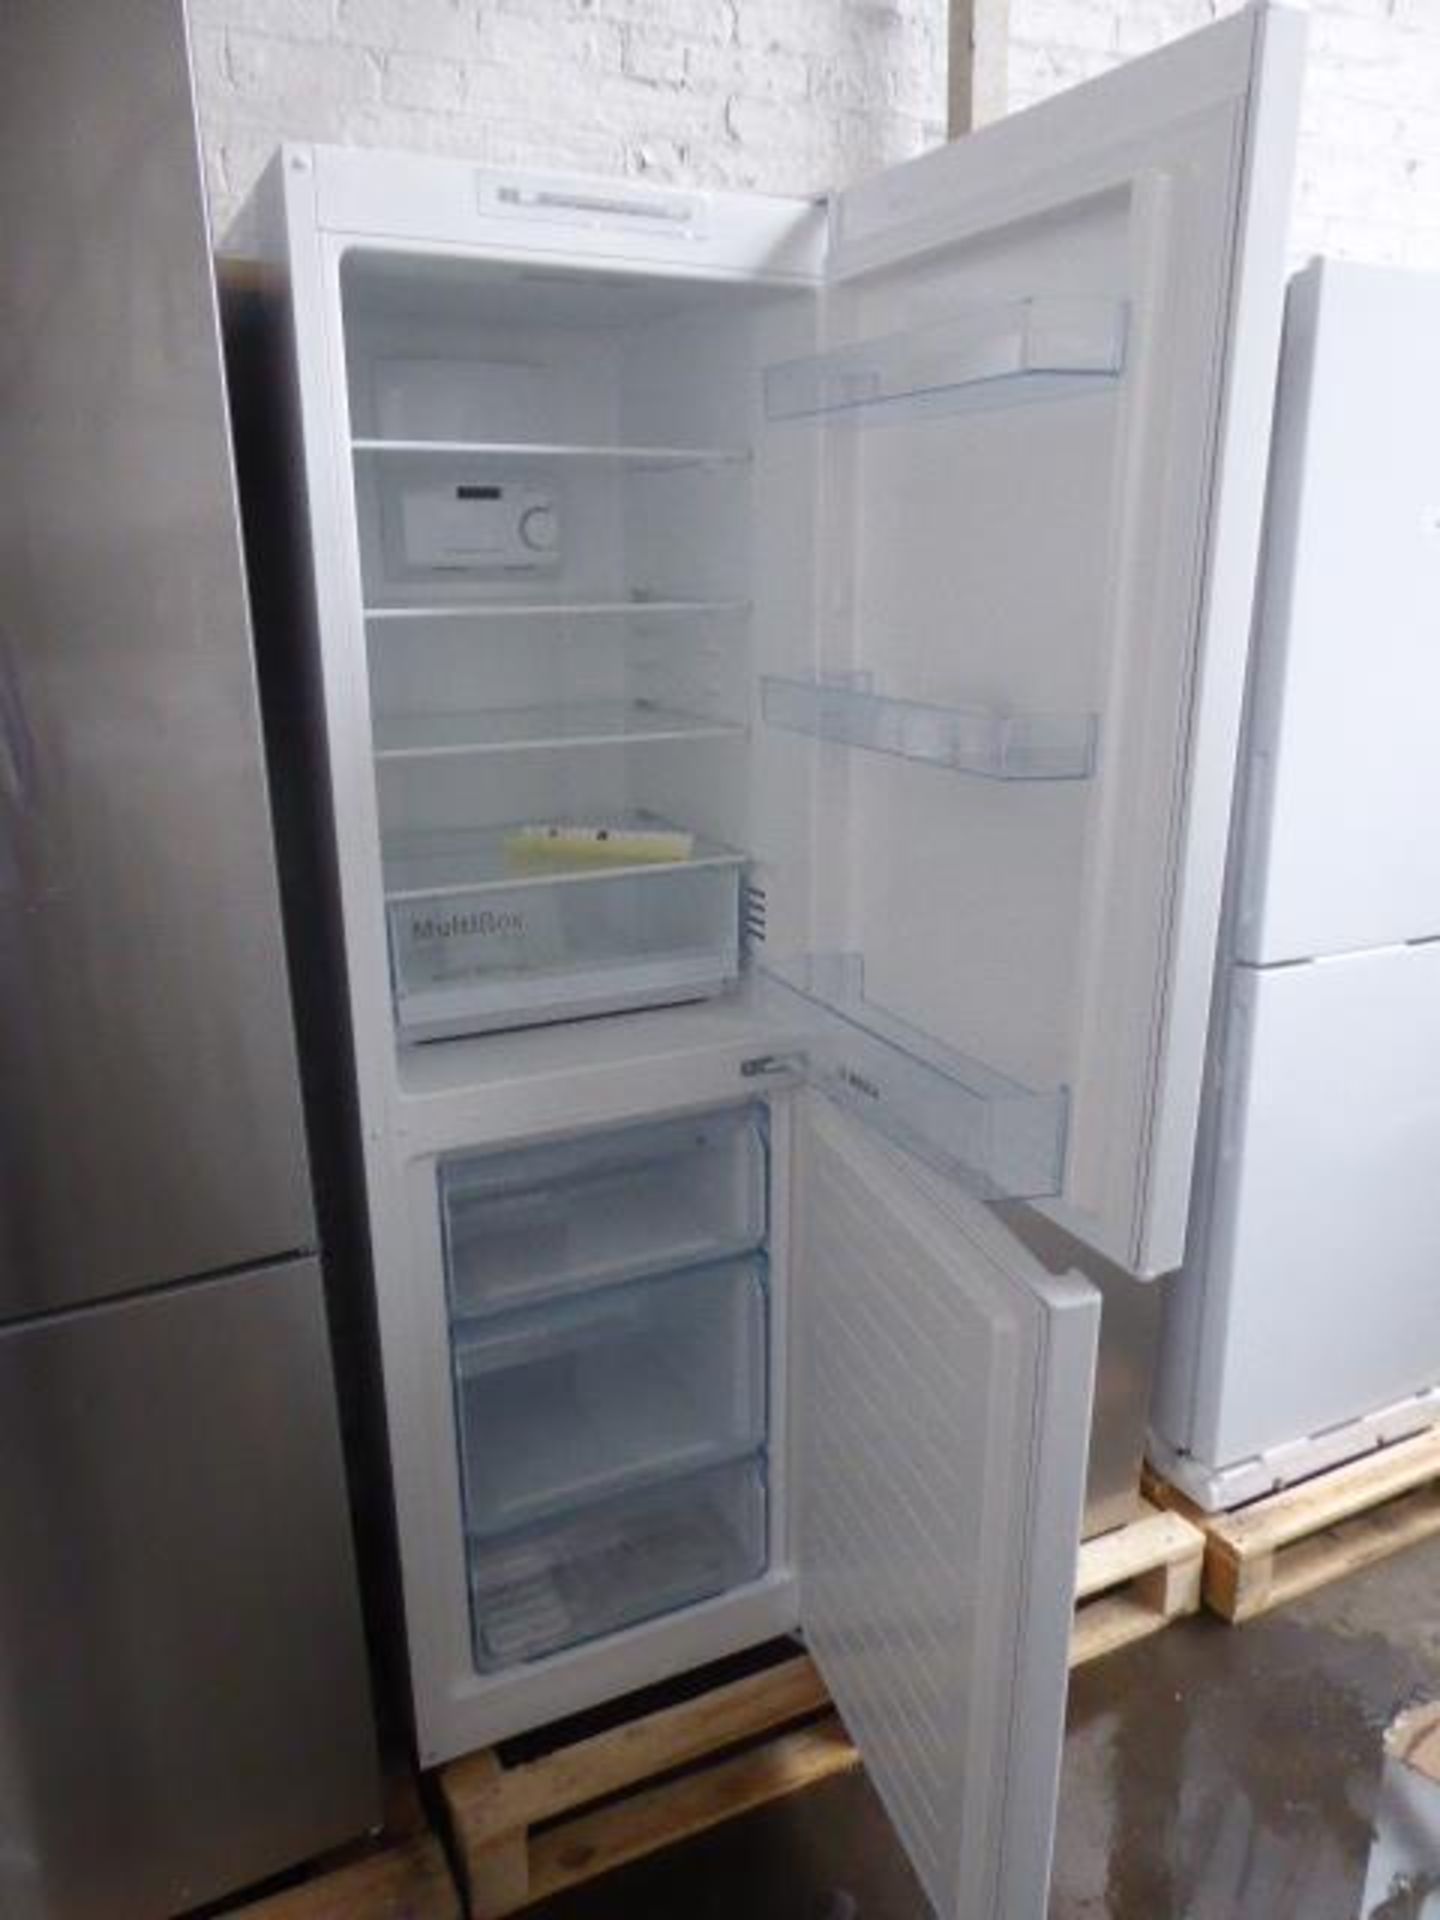 KGN34NWEAGB Bosch Free-standing fridge-freezer - Image 2 of 2